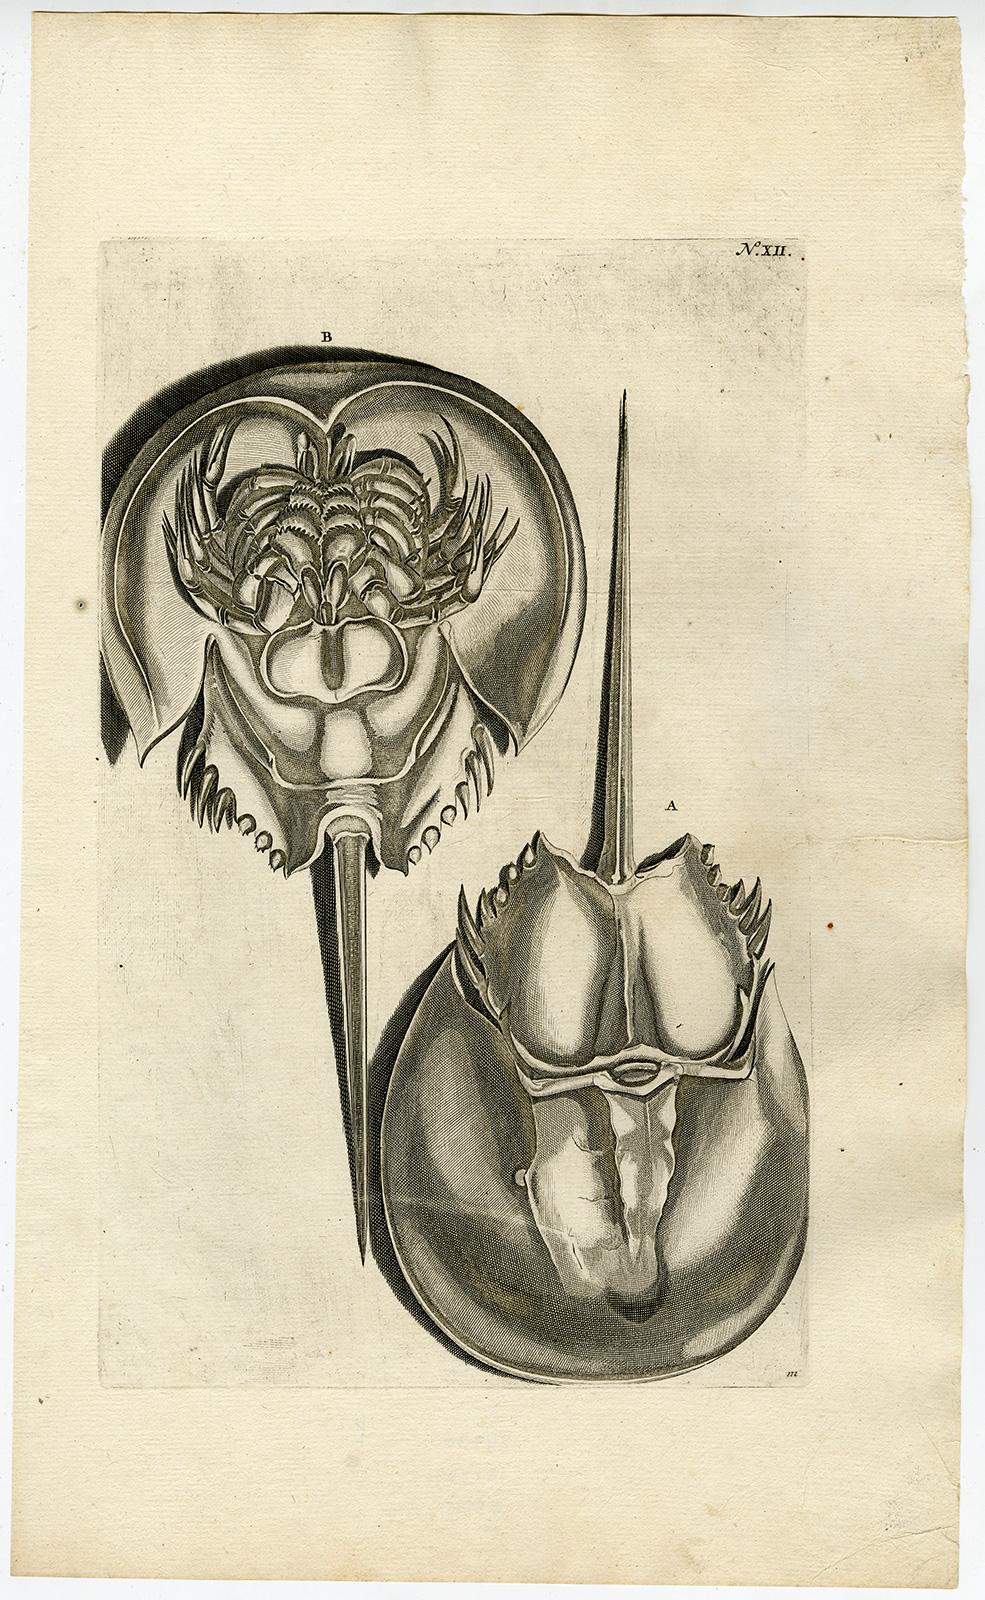 Jorg Eberhardt Rumph Animal Print - Horseshoe Crab - Ambonian Cabinet of Curiosities Rumphius - Engraving - 18th c.